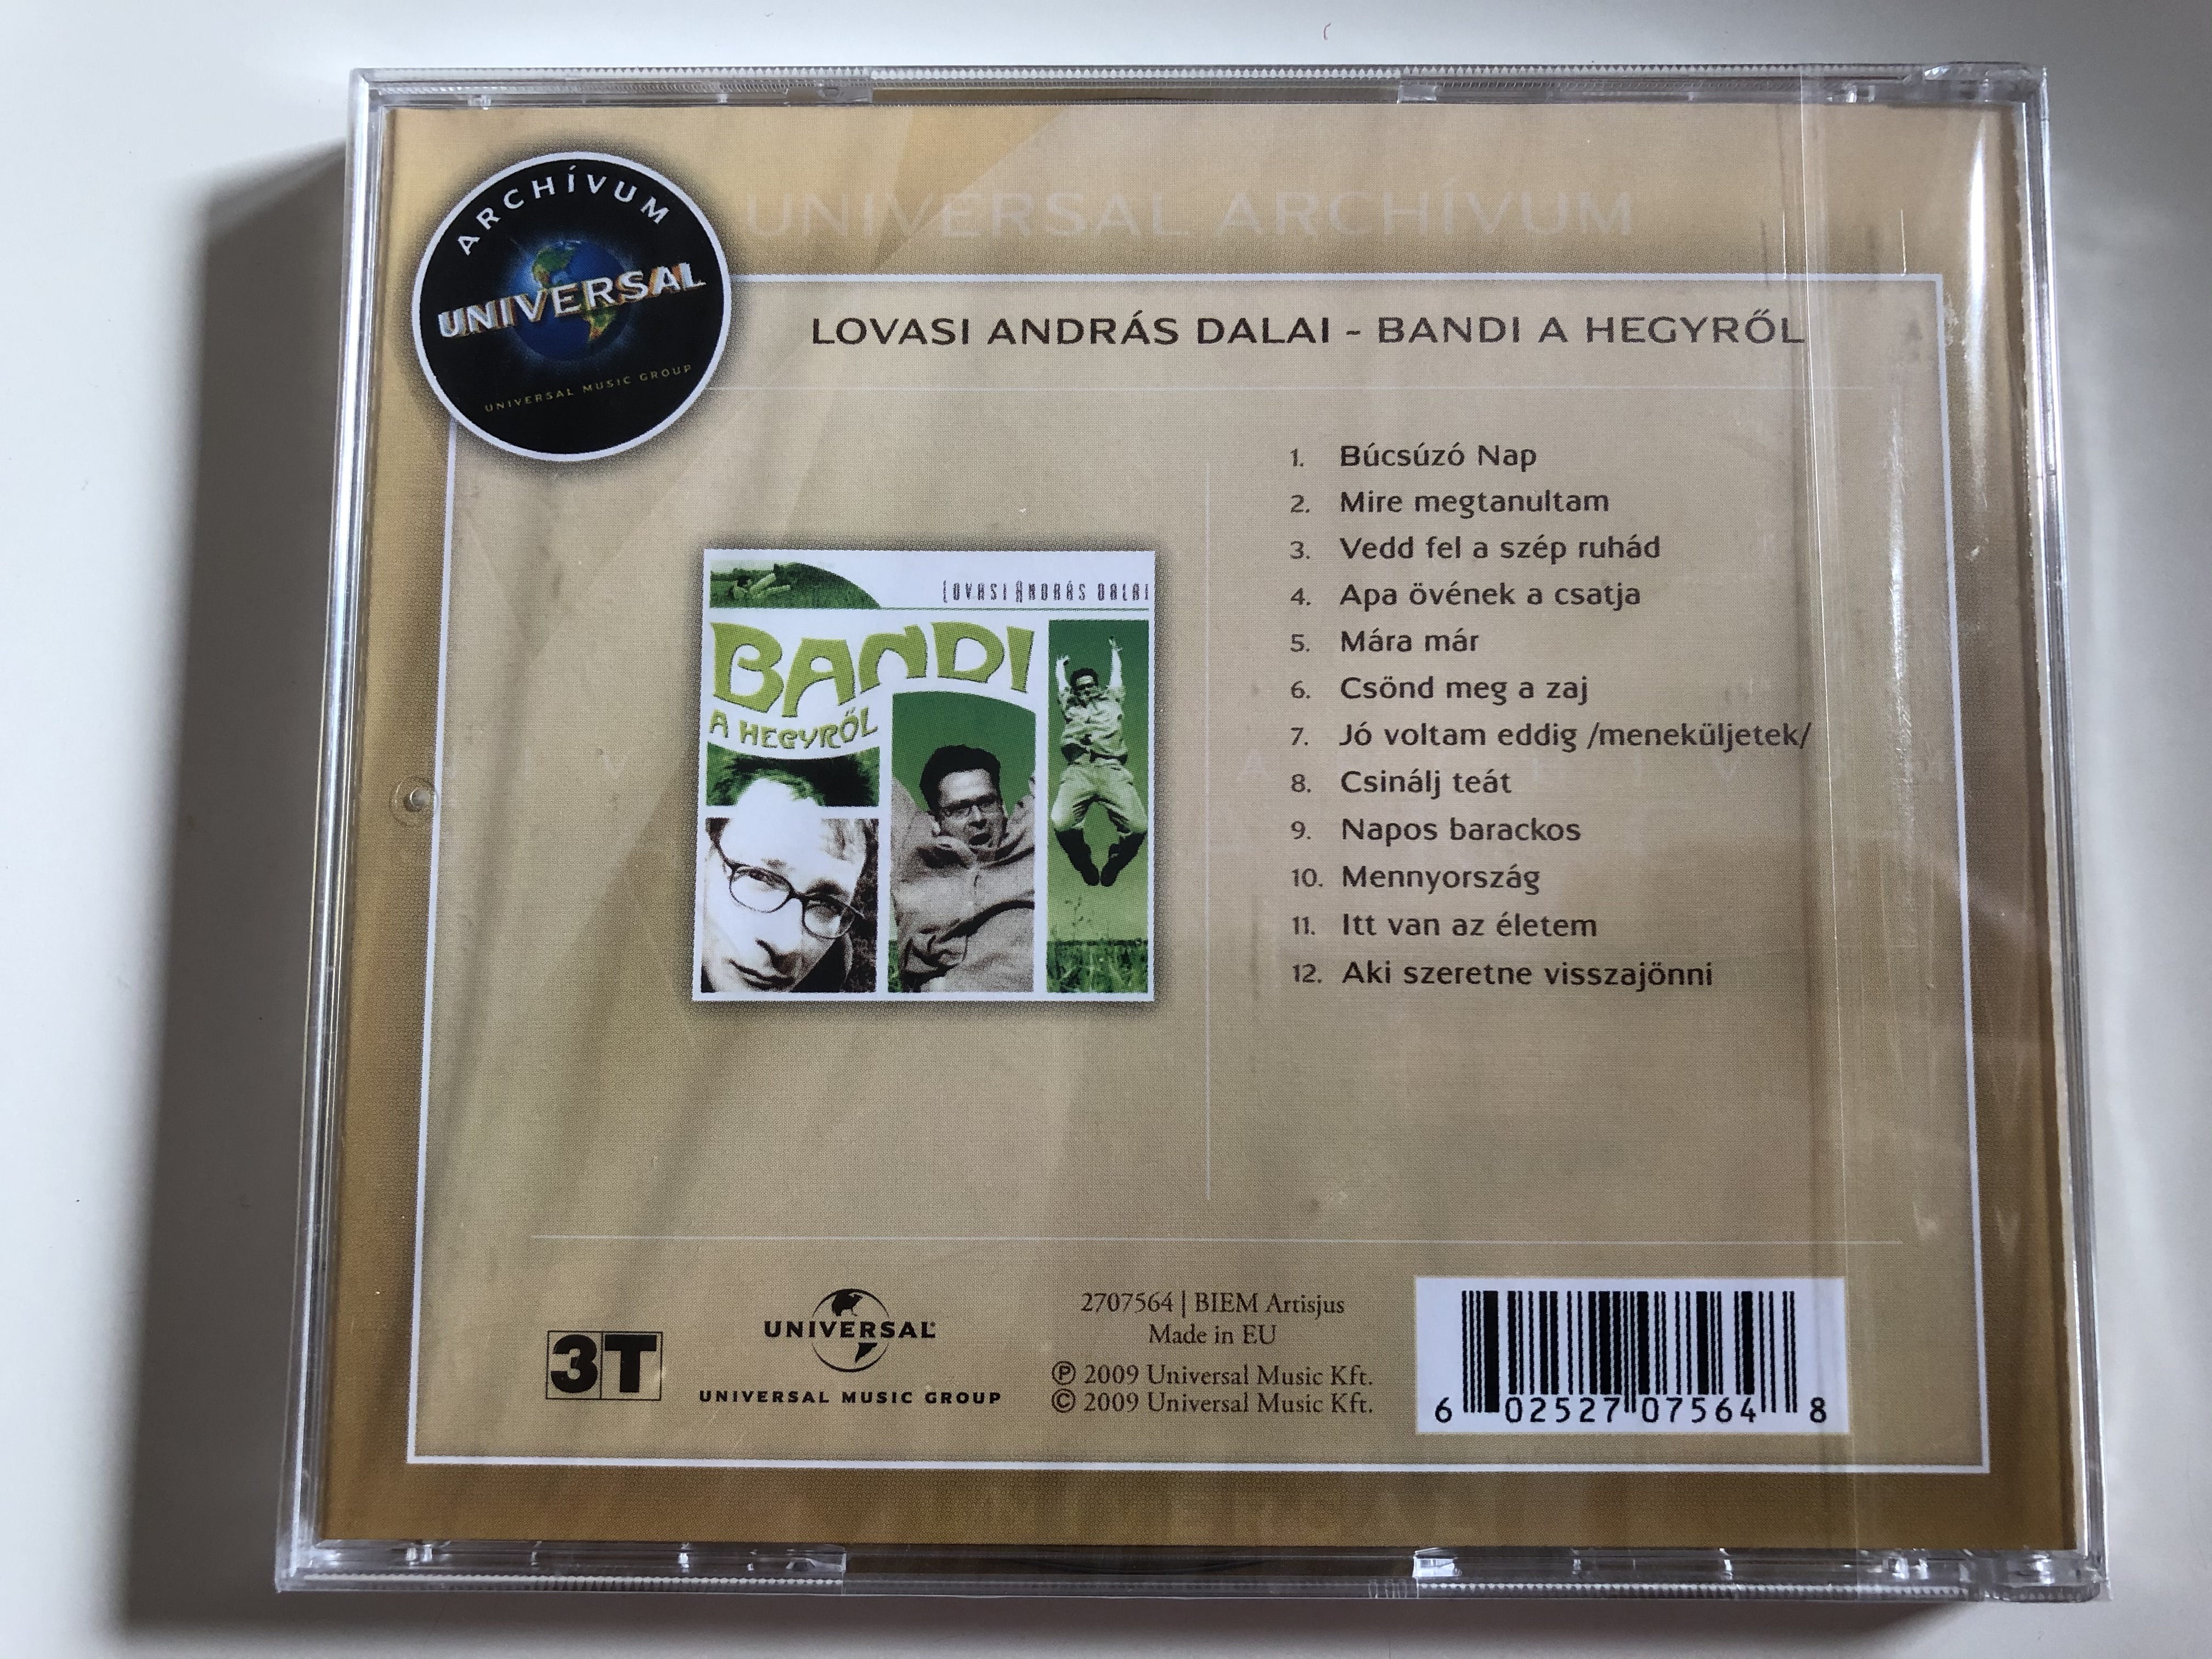 lovasi-andr-s-dalai-bandi-a-hegyr-l-eredeti-felvetelek-universal-music-audio-cd-2009-2707564-2-.jpg